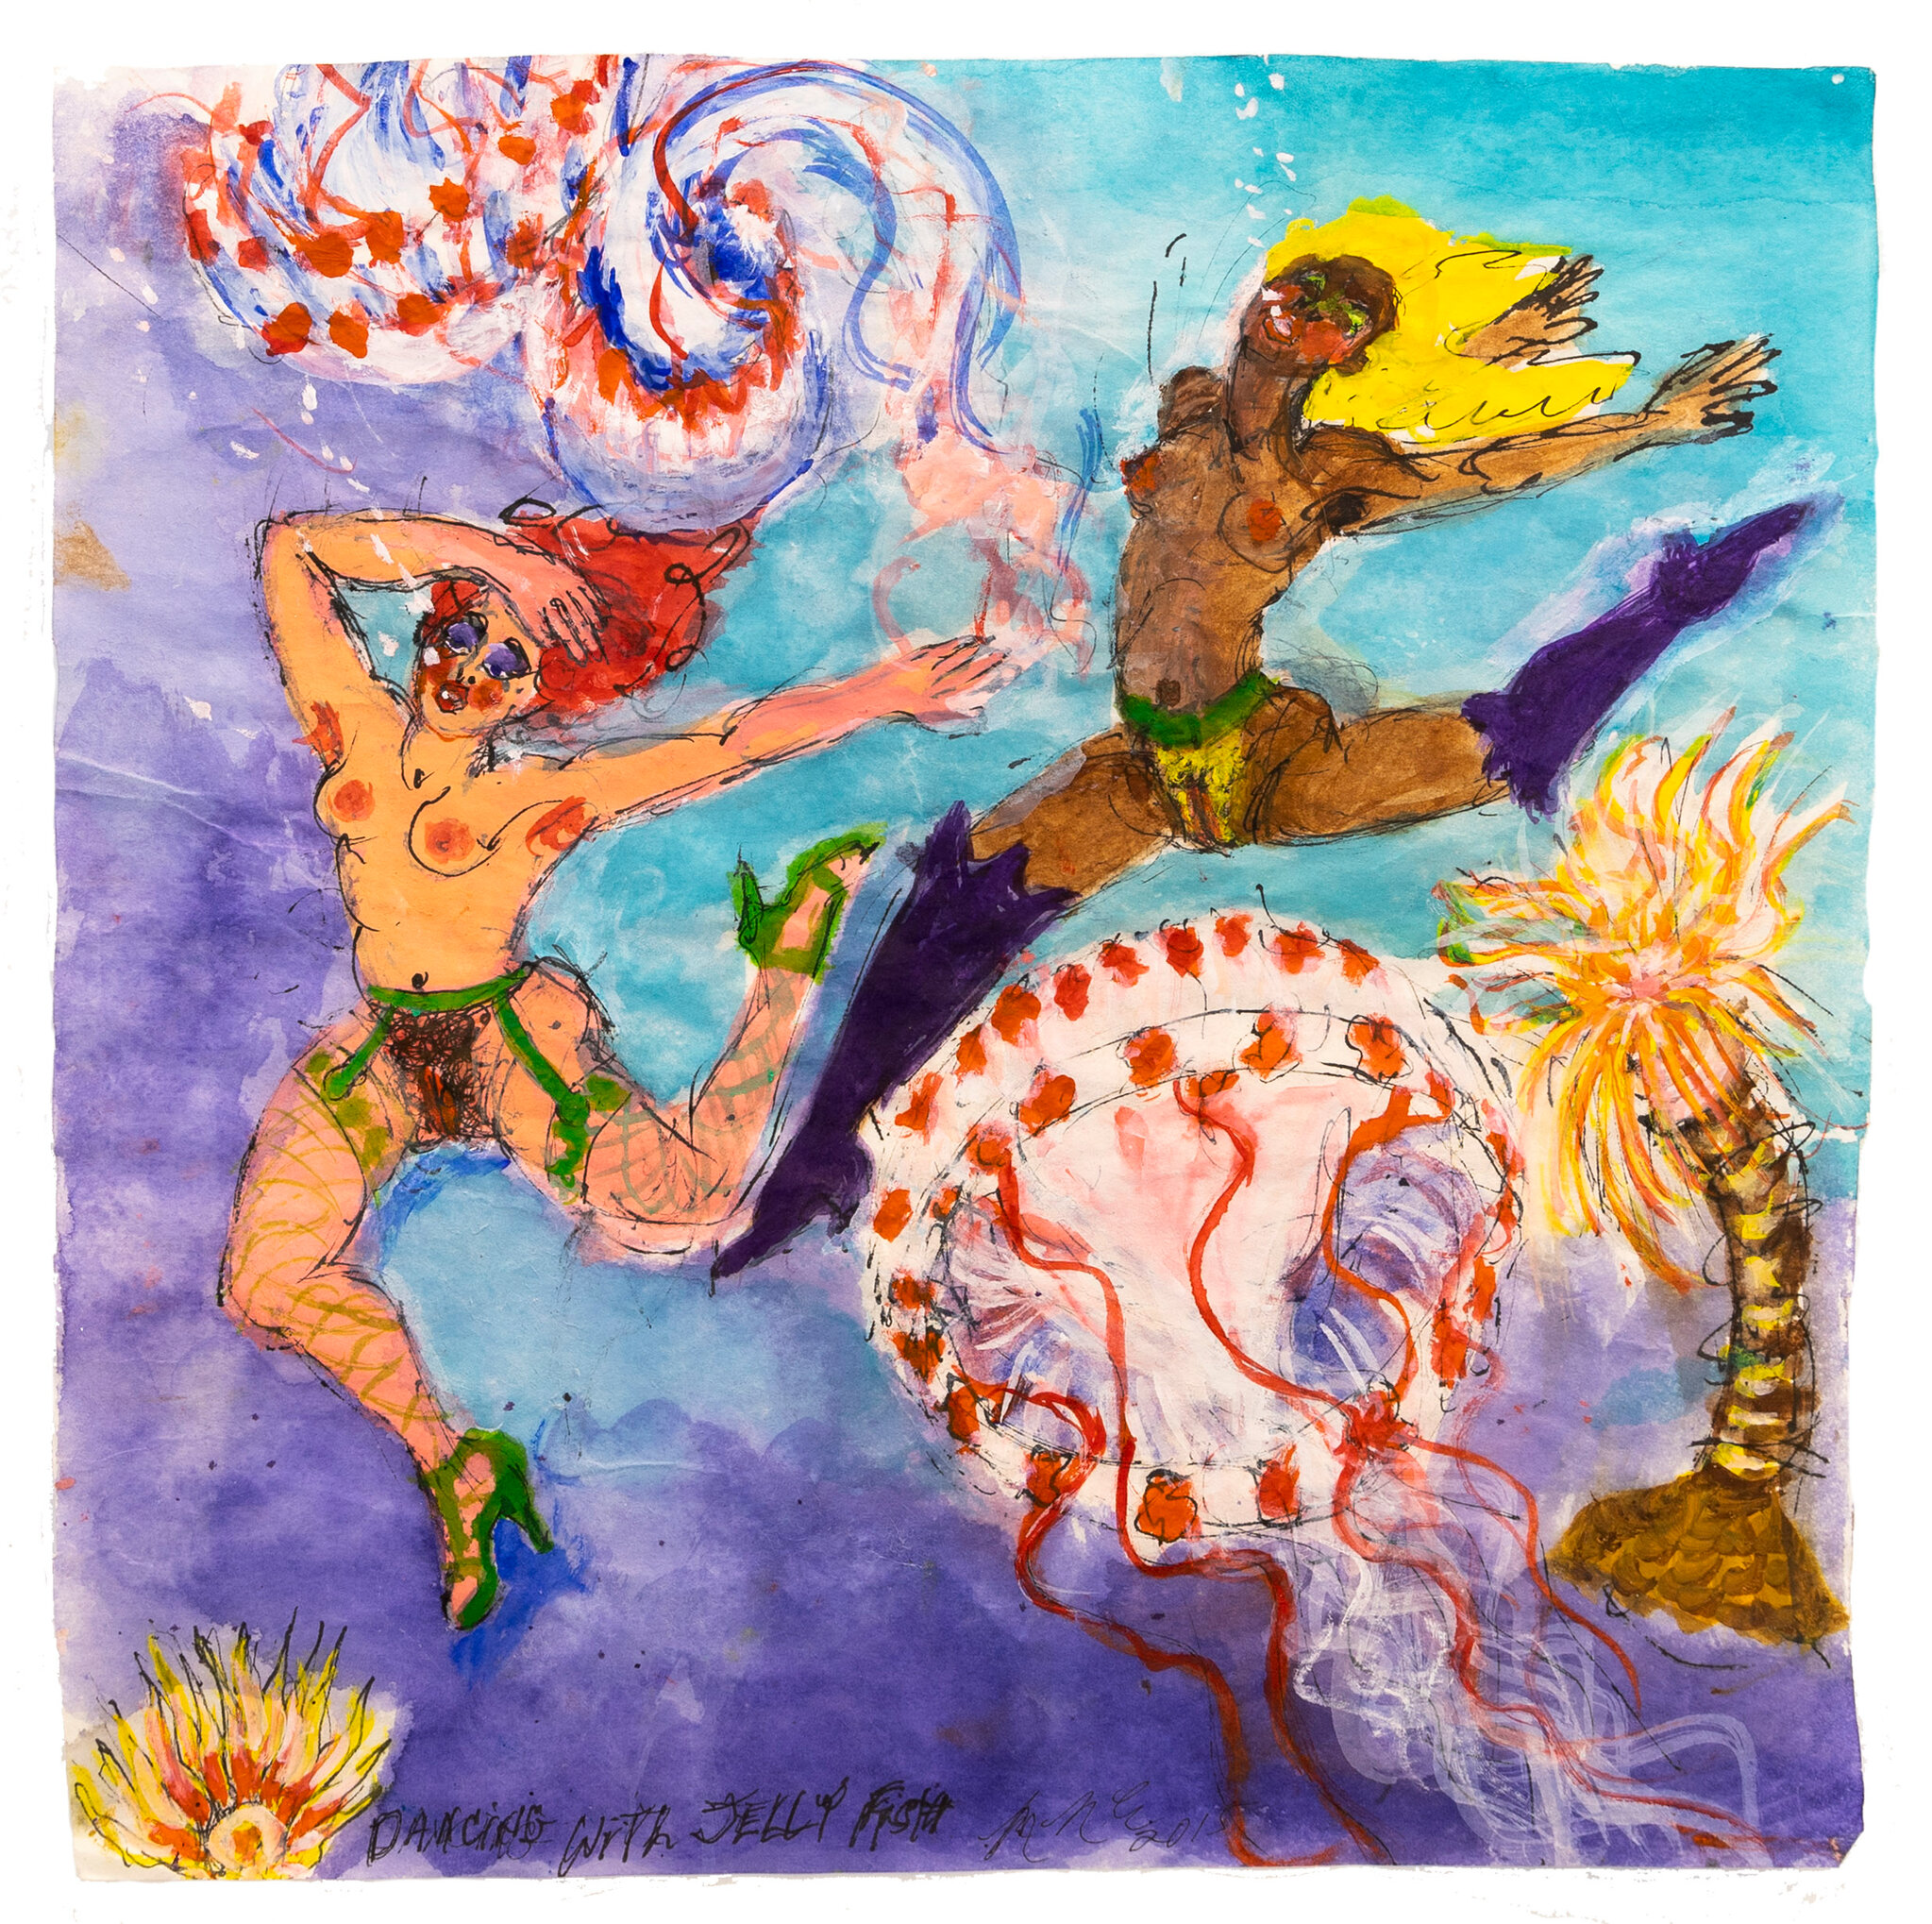 Martha Edelheit, Dancing with Jelly Fish, 2015